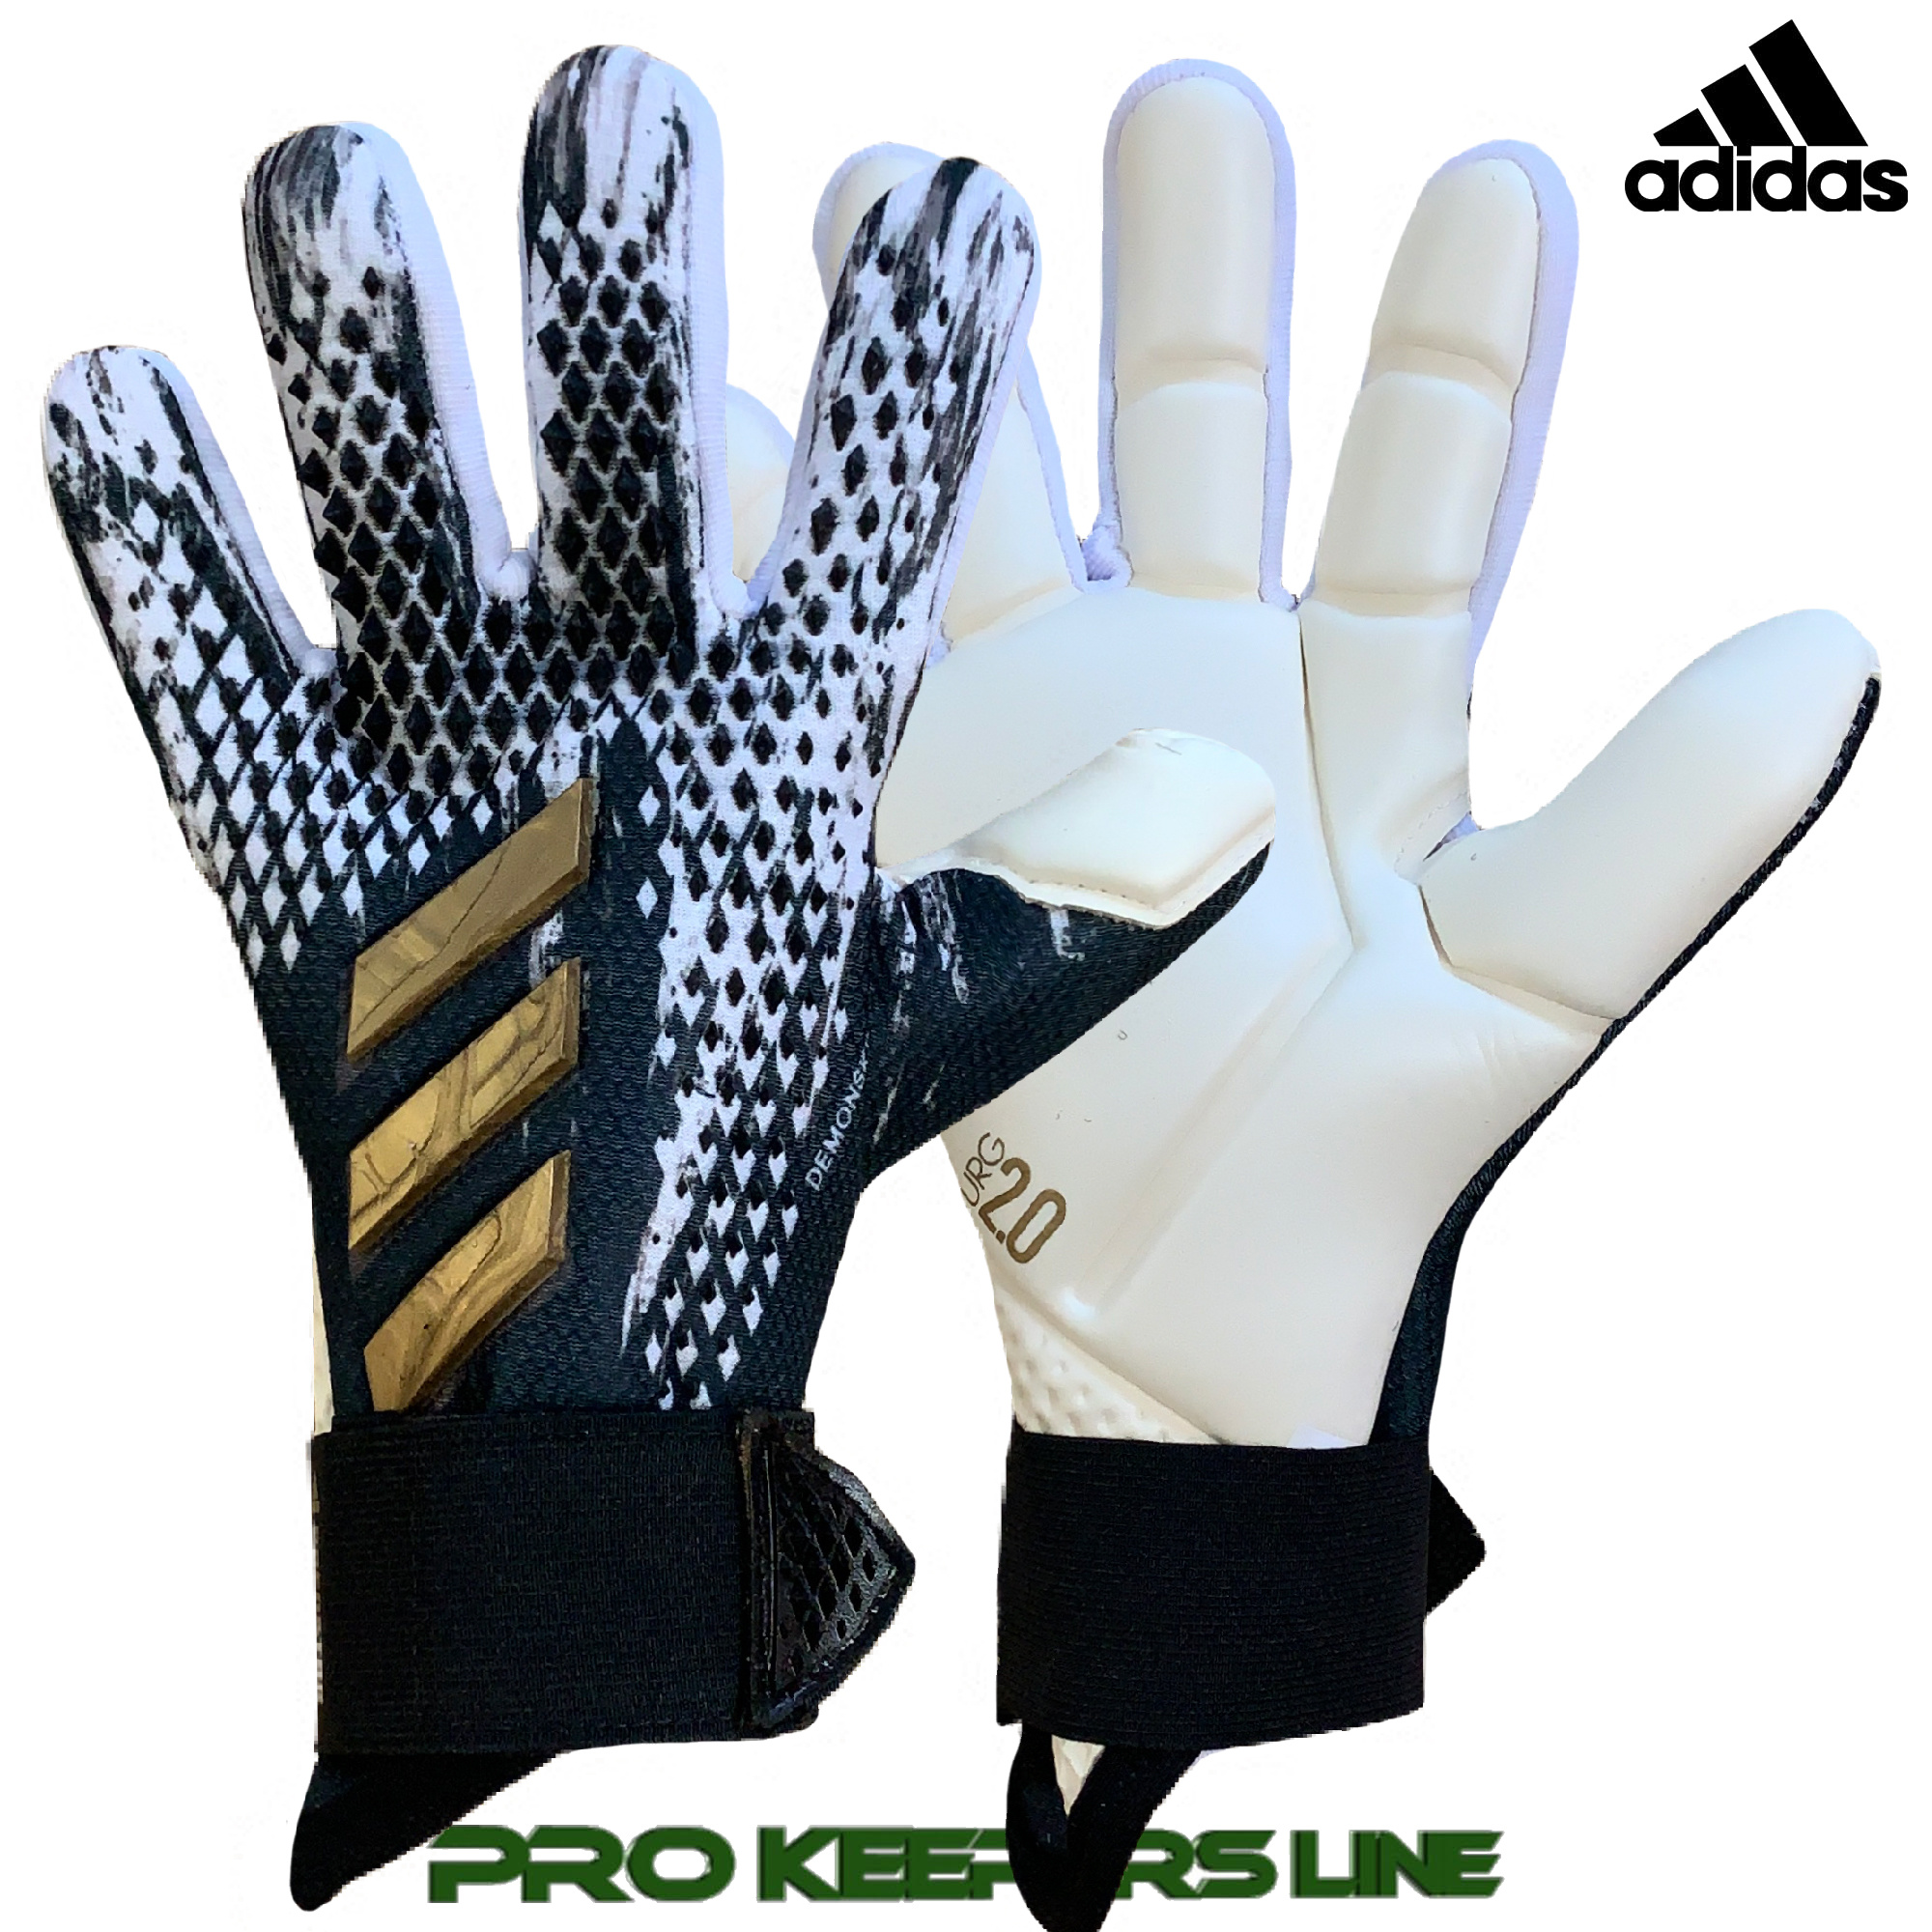 adidas predator pro junior gloves